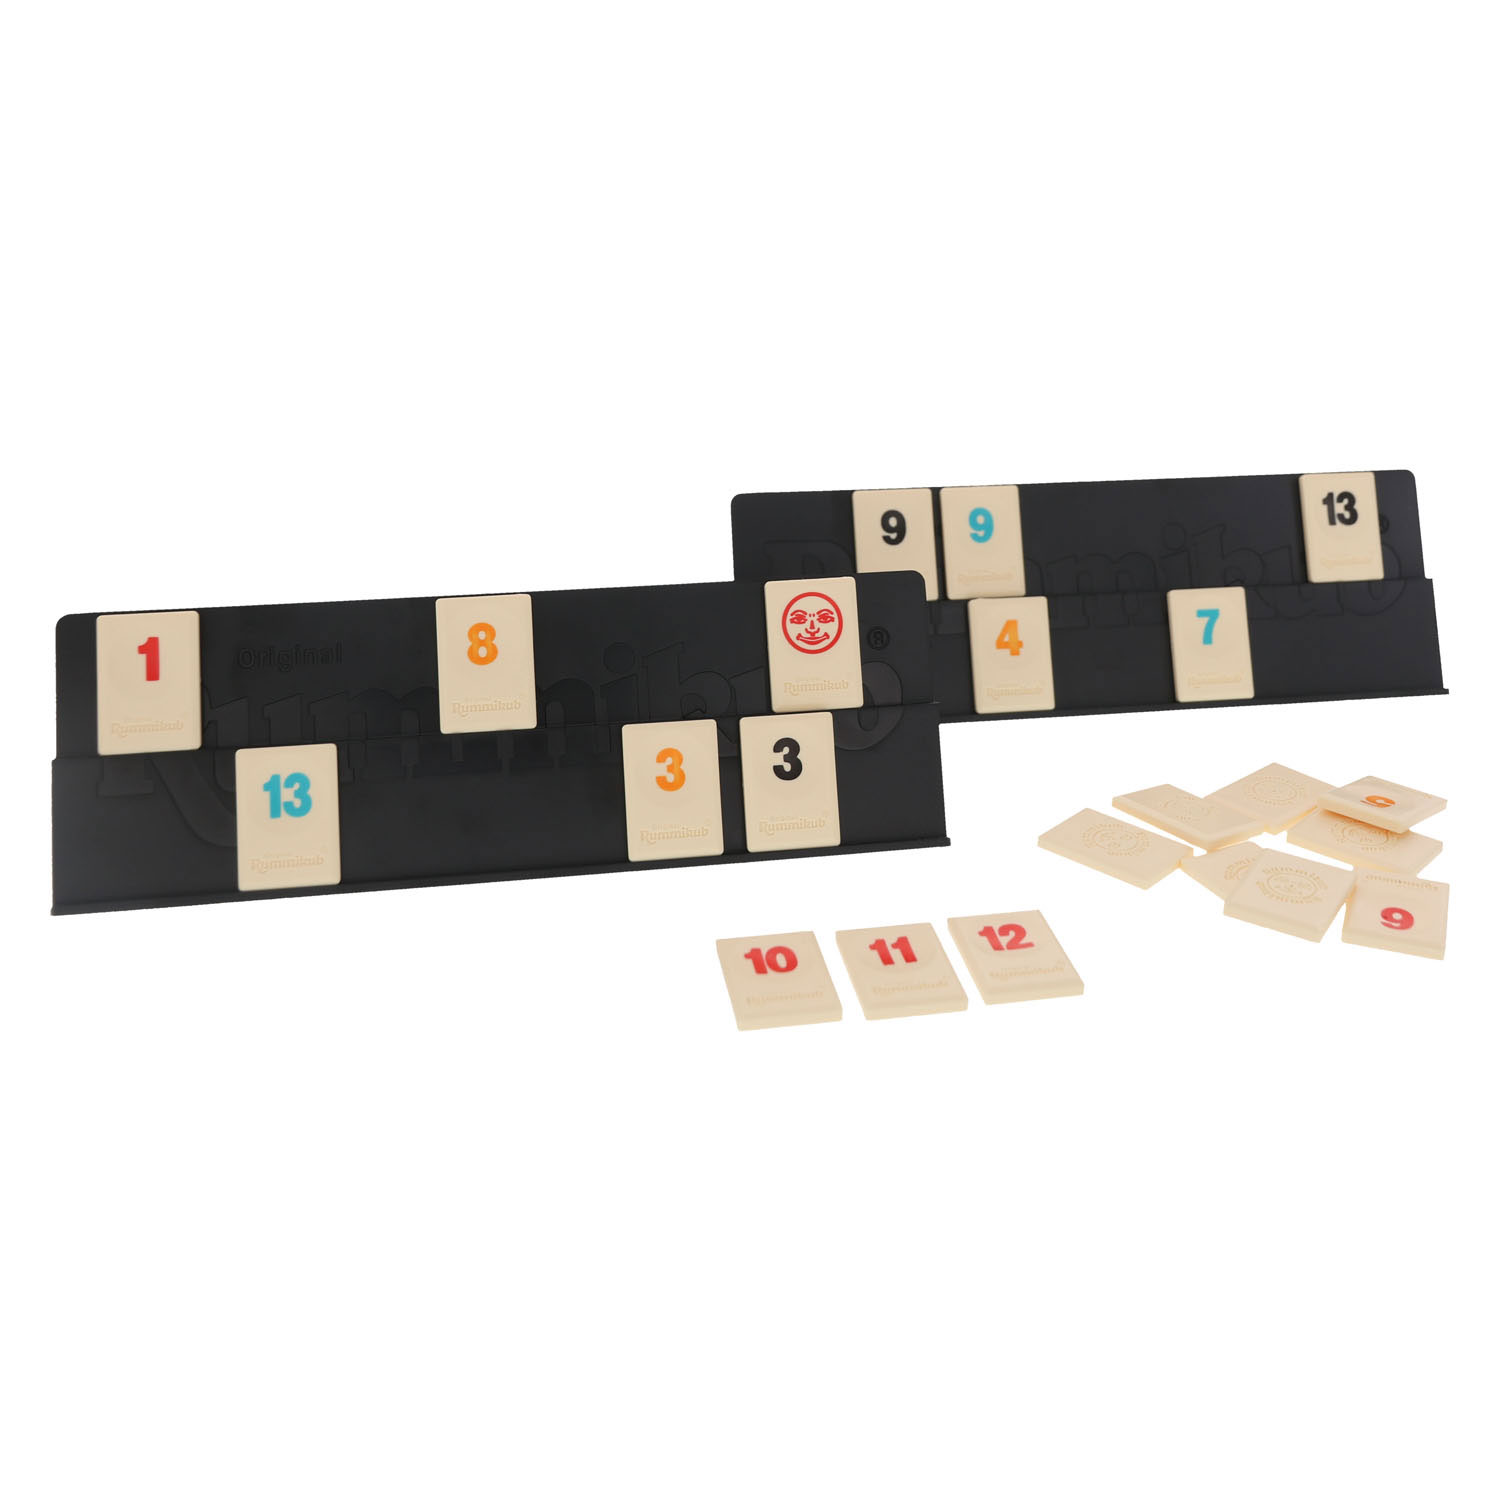 Rummikub Compact Original – Brettspiel